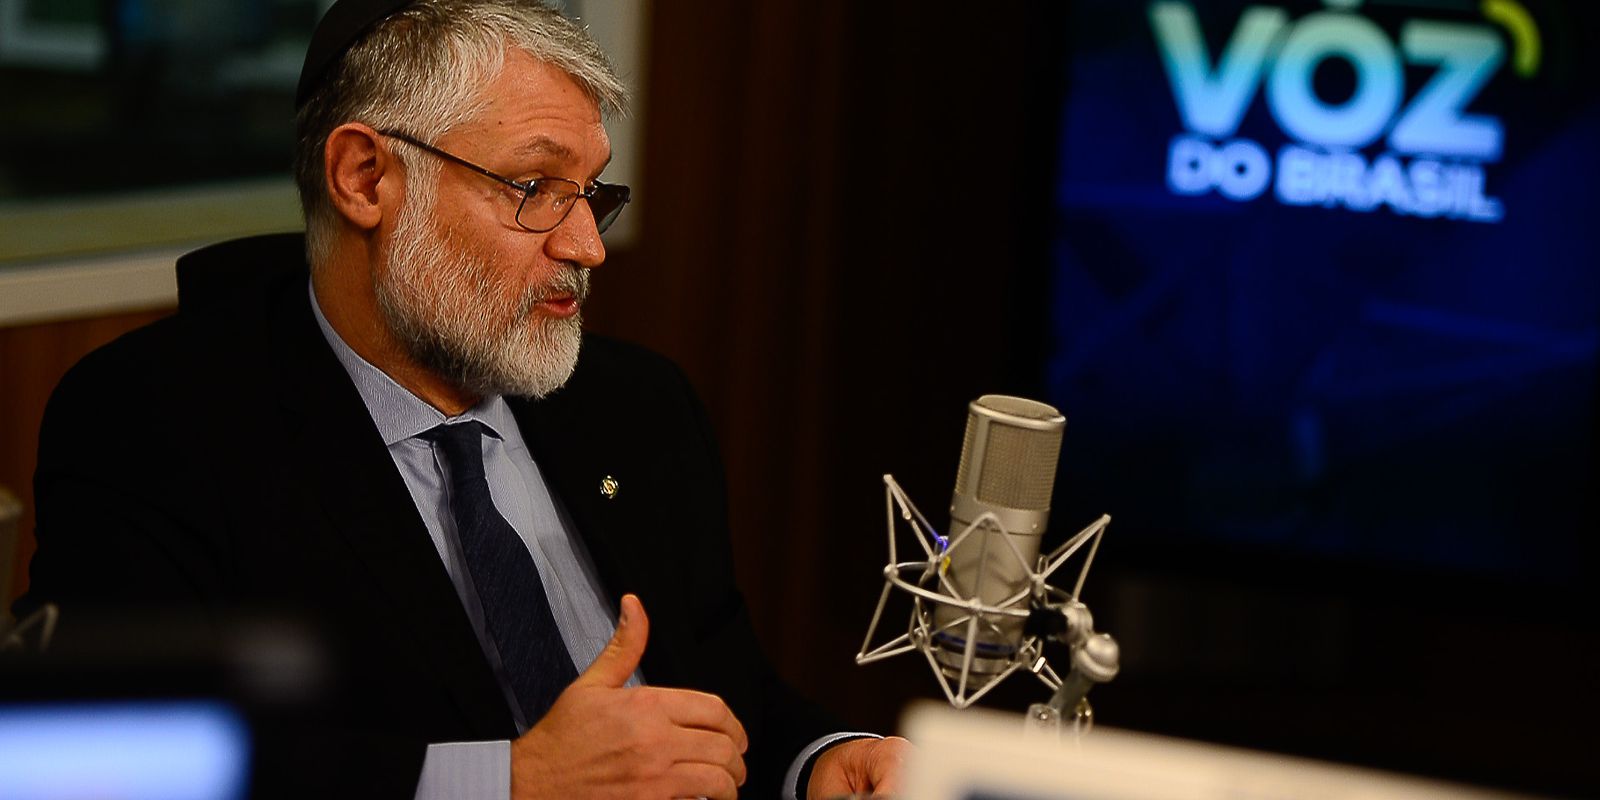 Brazil has vigorous visitation to museums, says president of Ibram